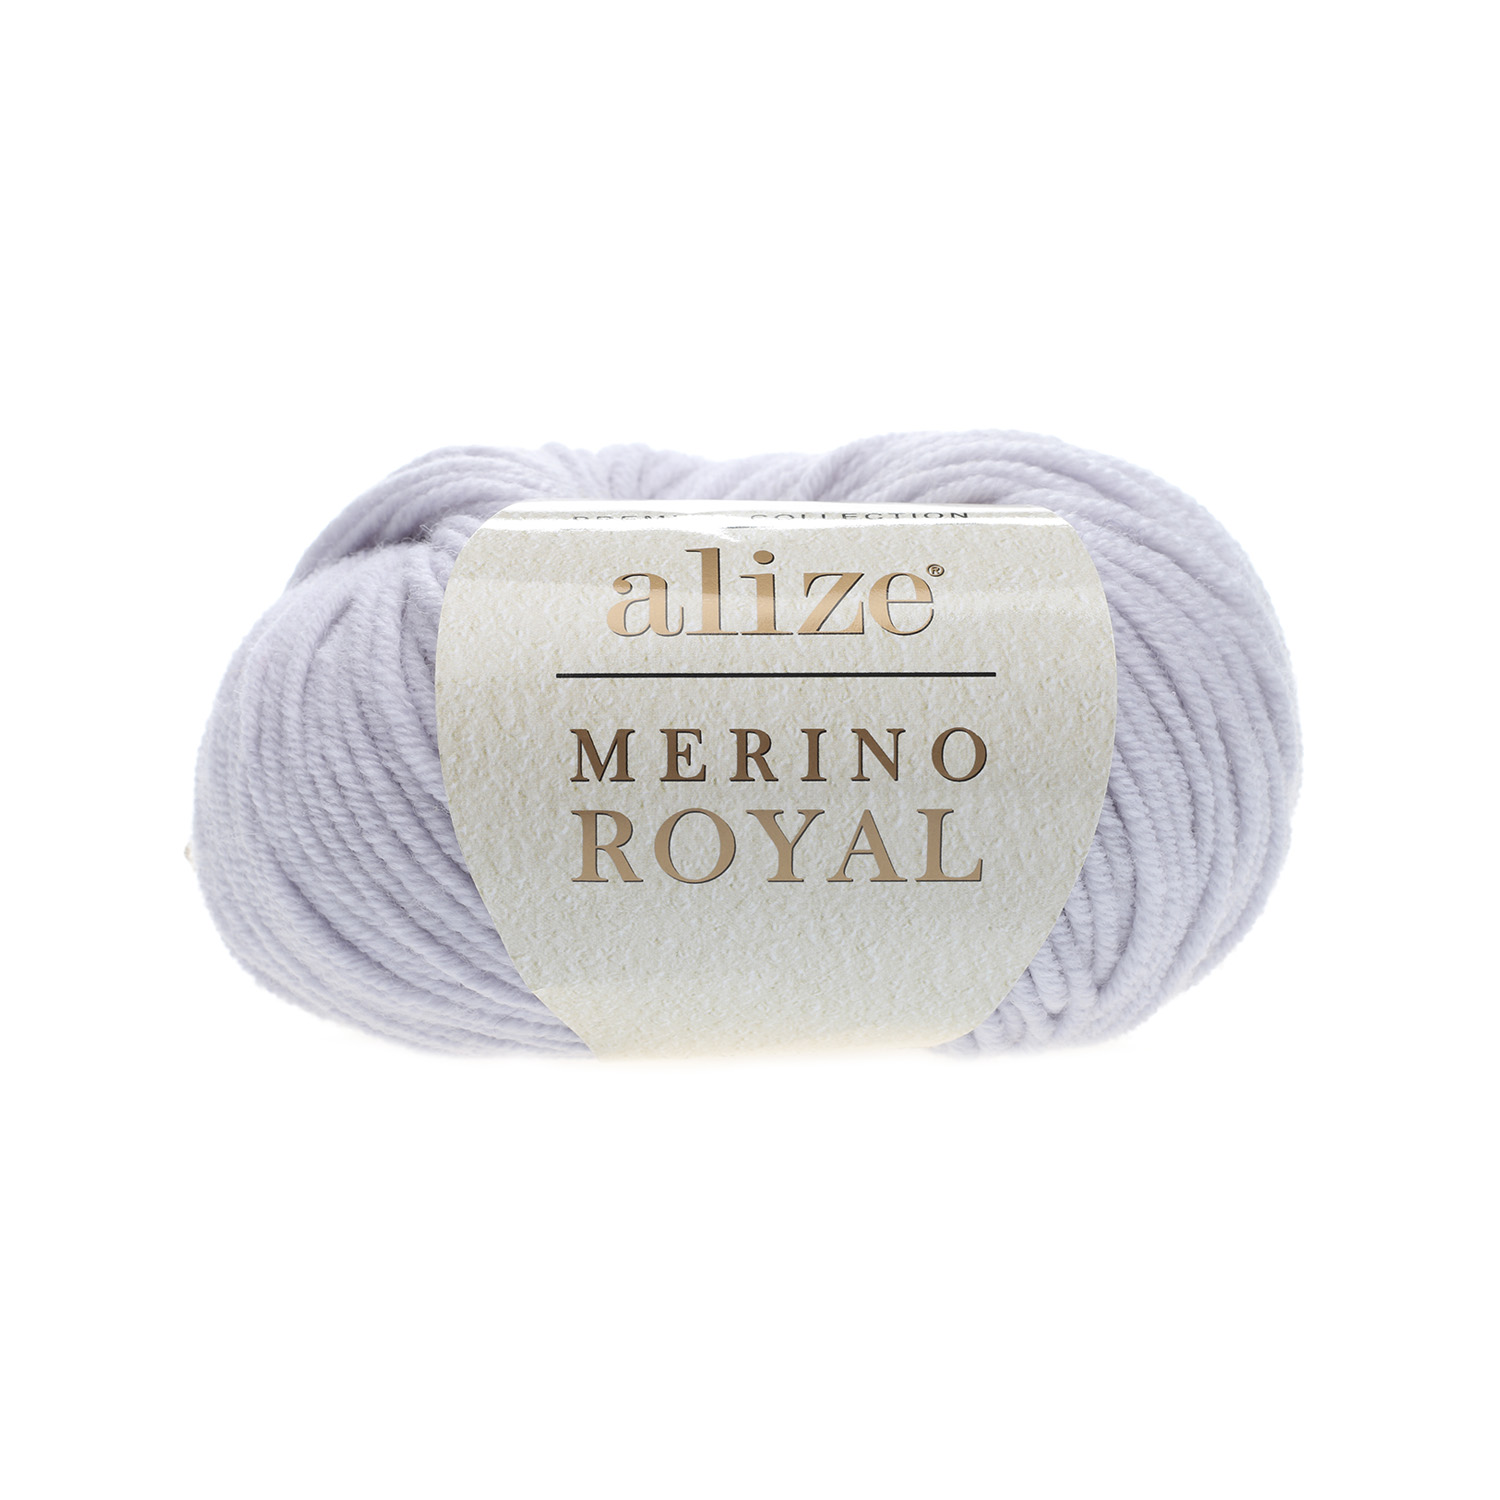 Merino Royal 362 светло-серый